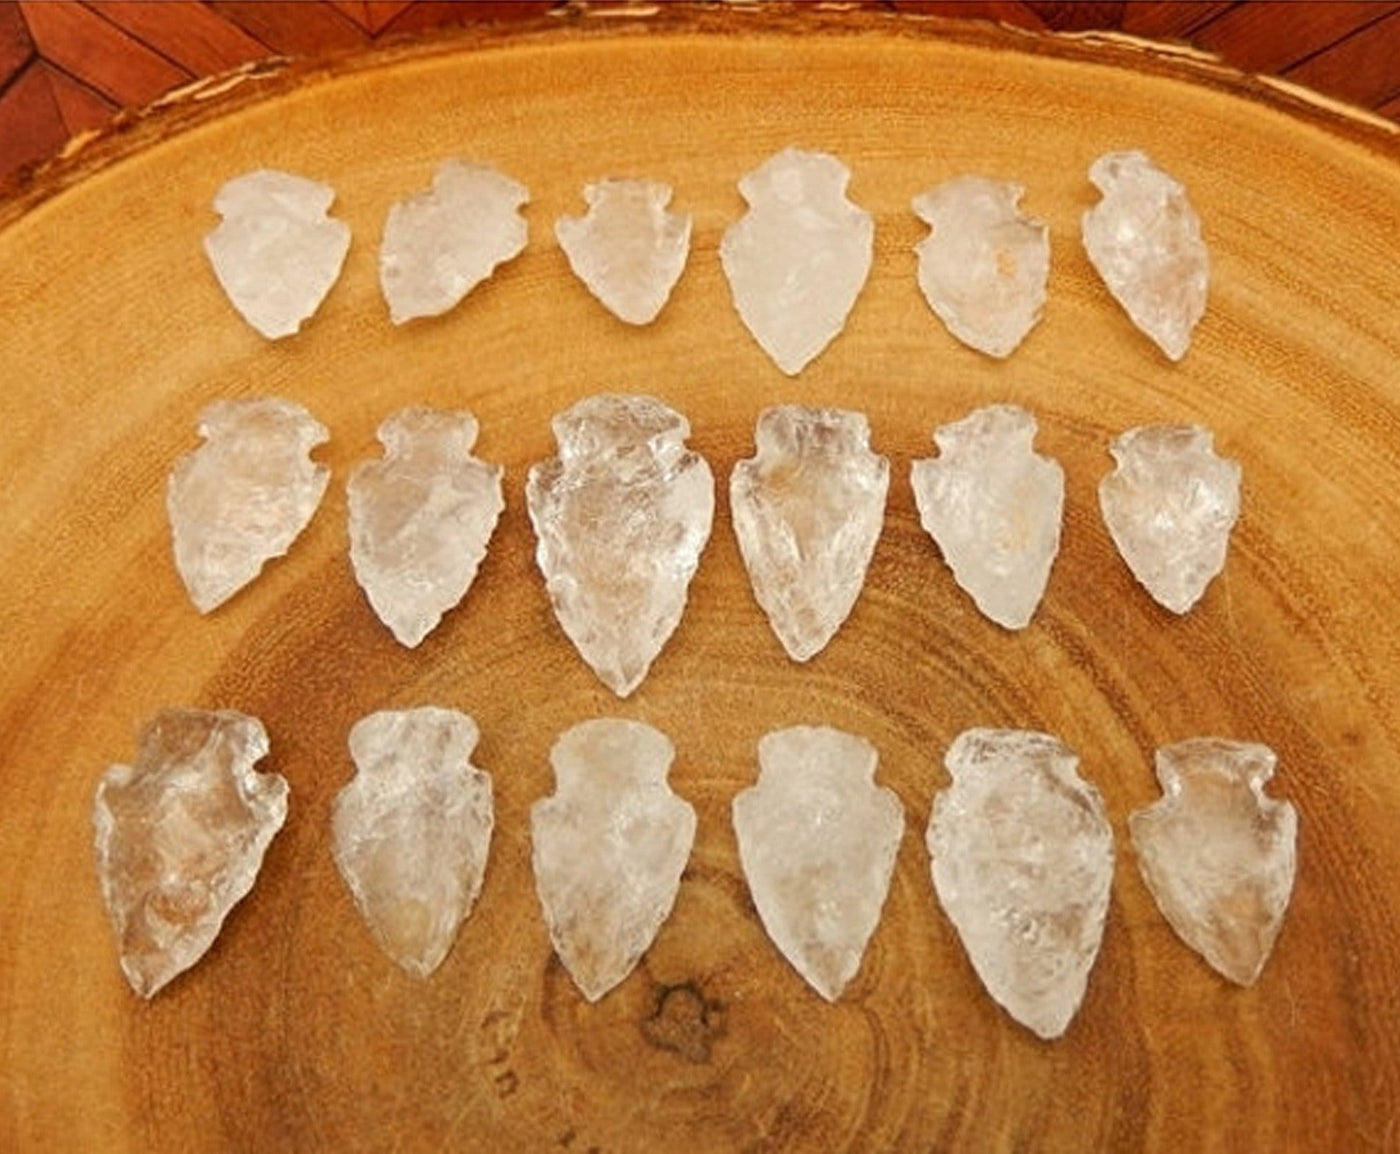 Crystal Quartz Arrowheads in 3 rows